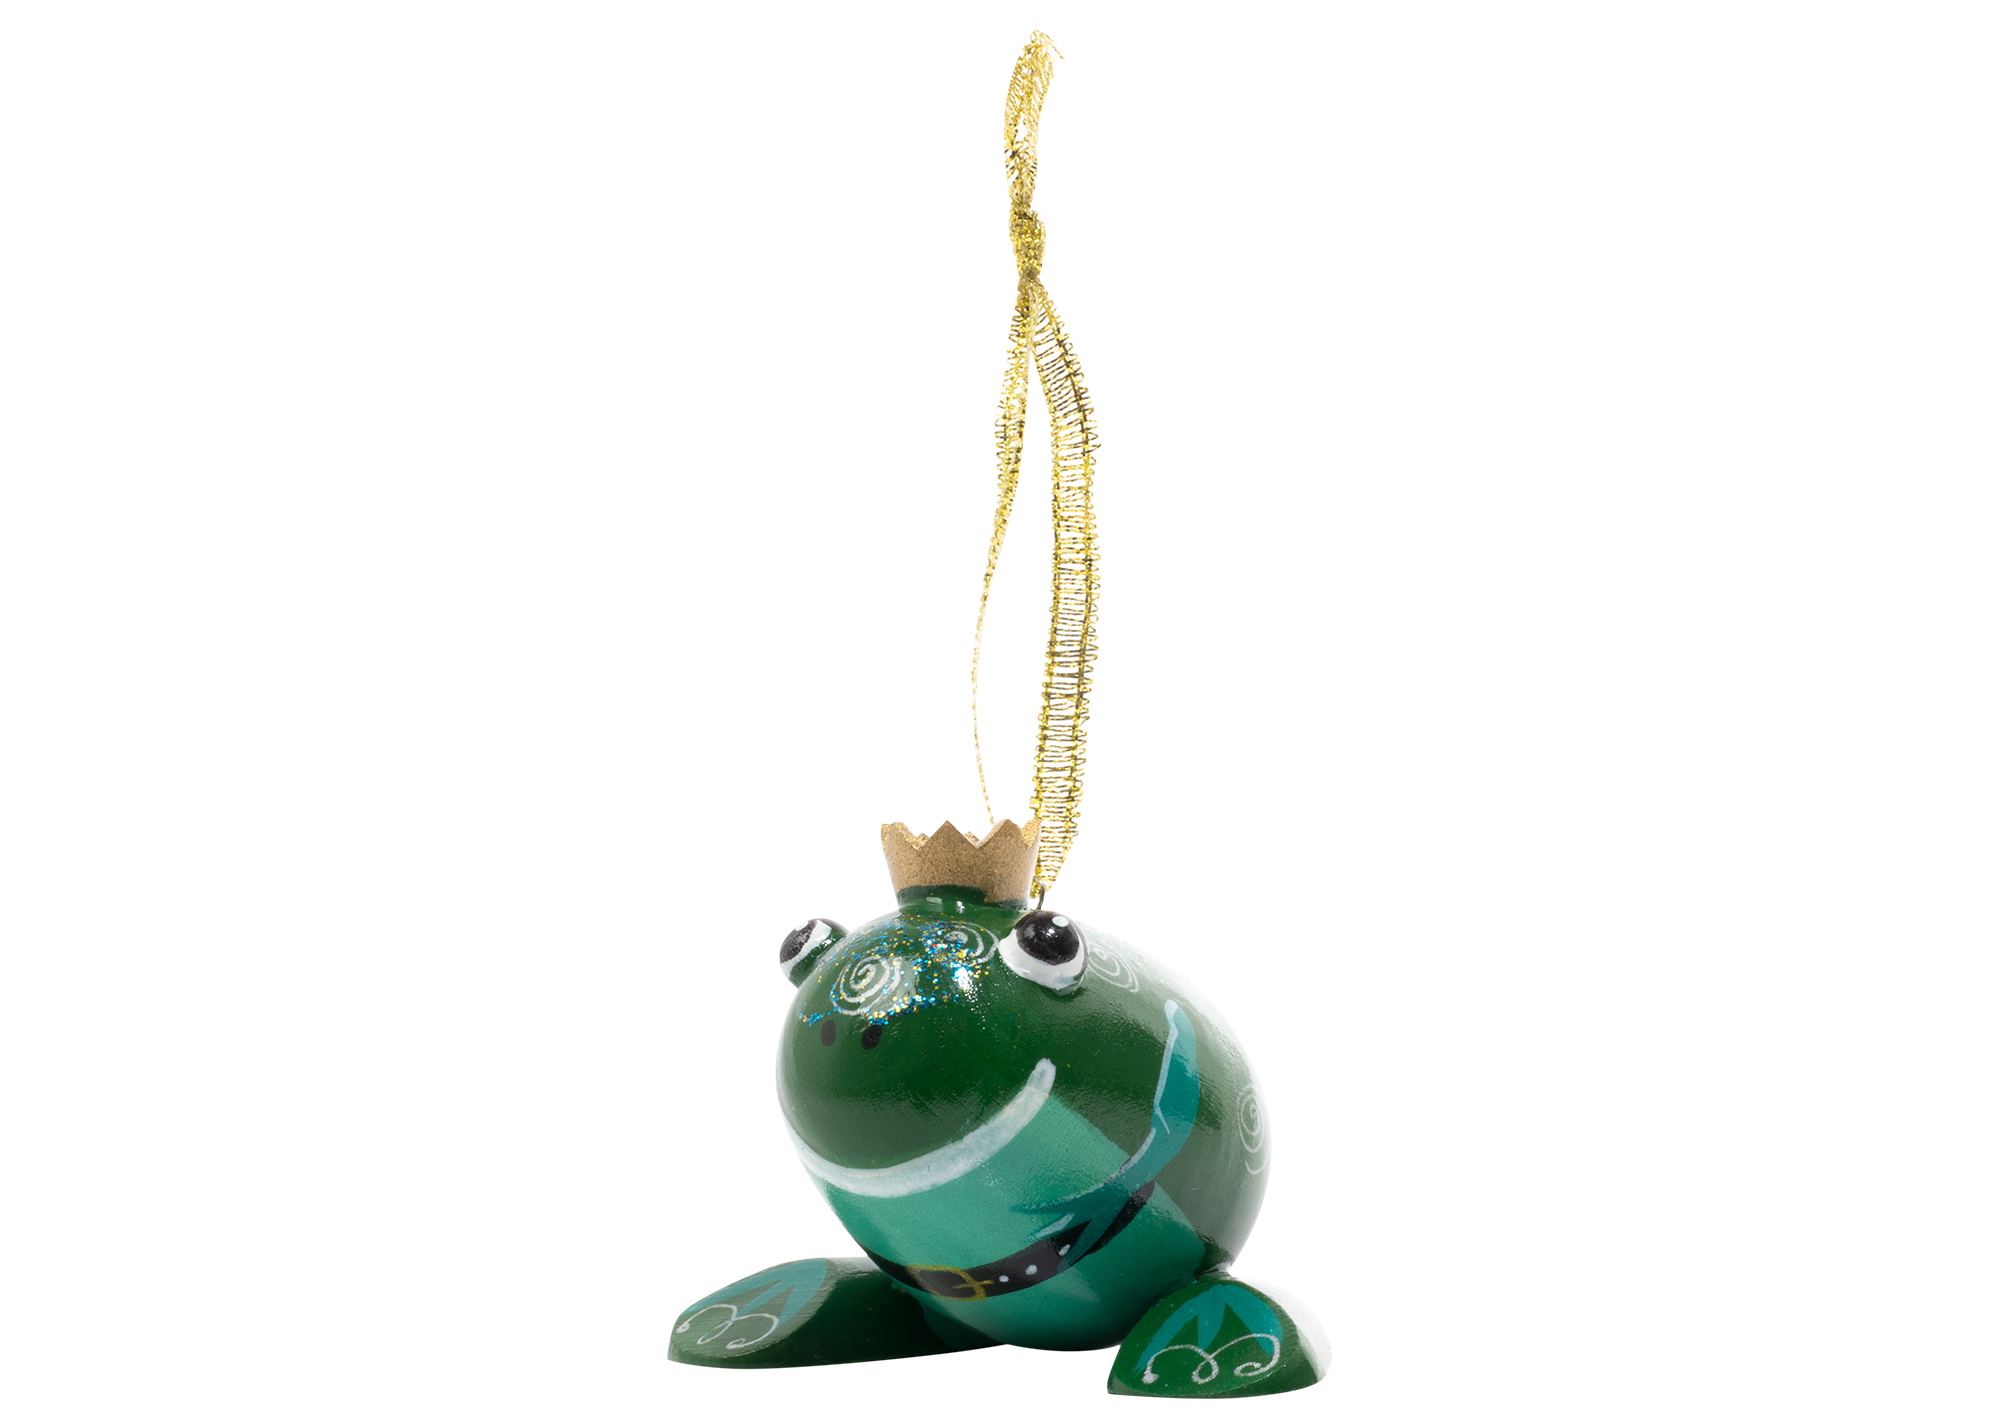 Buy Frog Prince Ornament 2" at GoldenCockerel.com